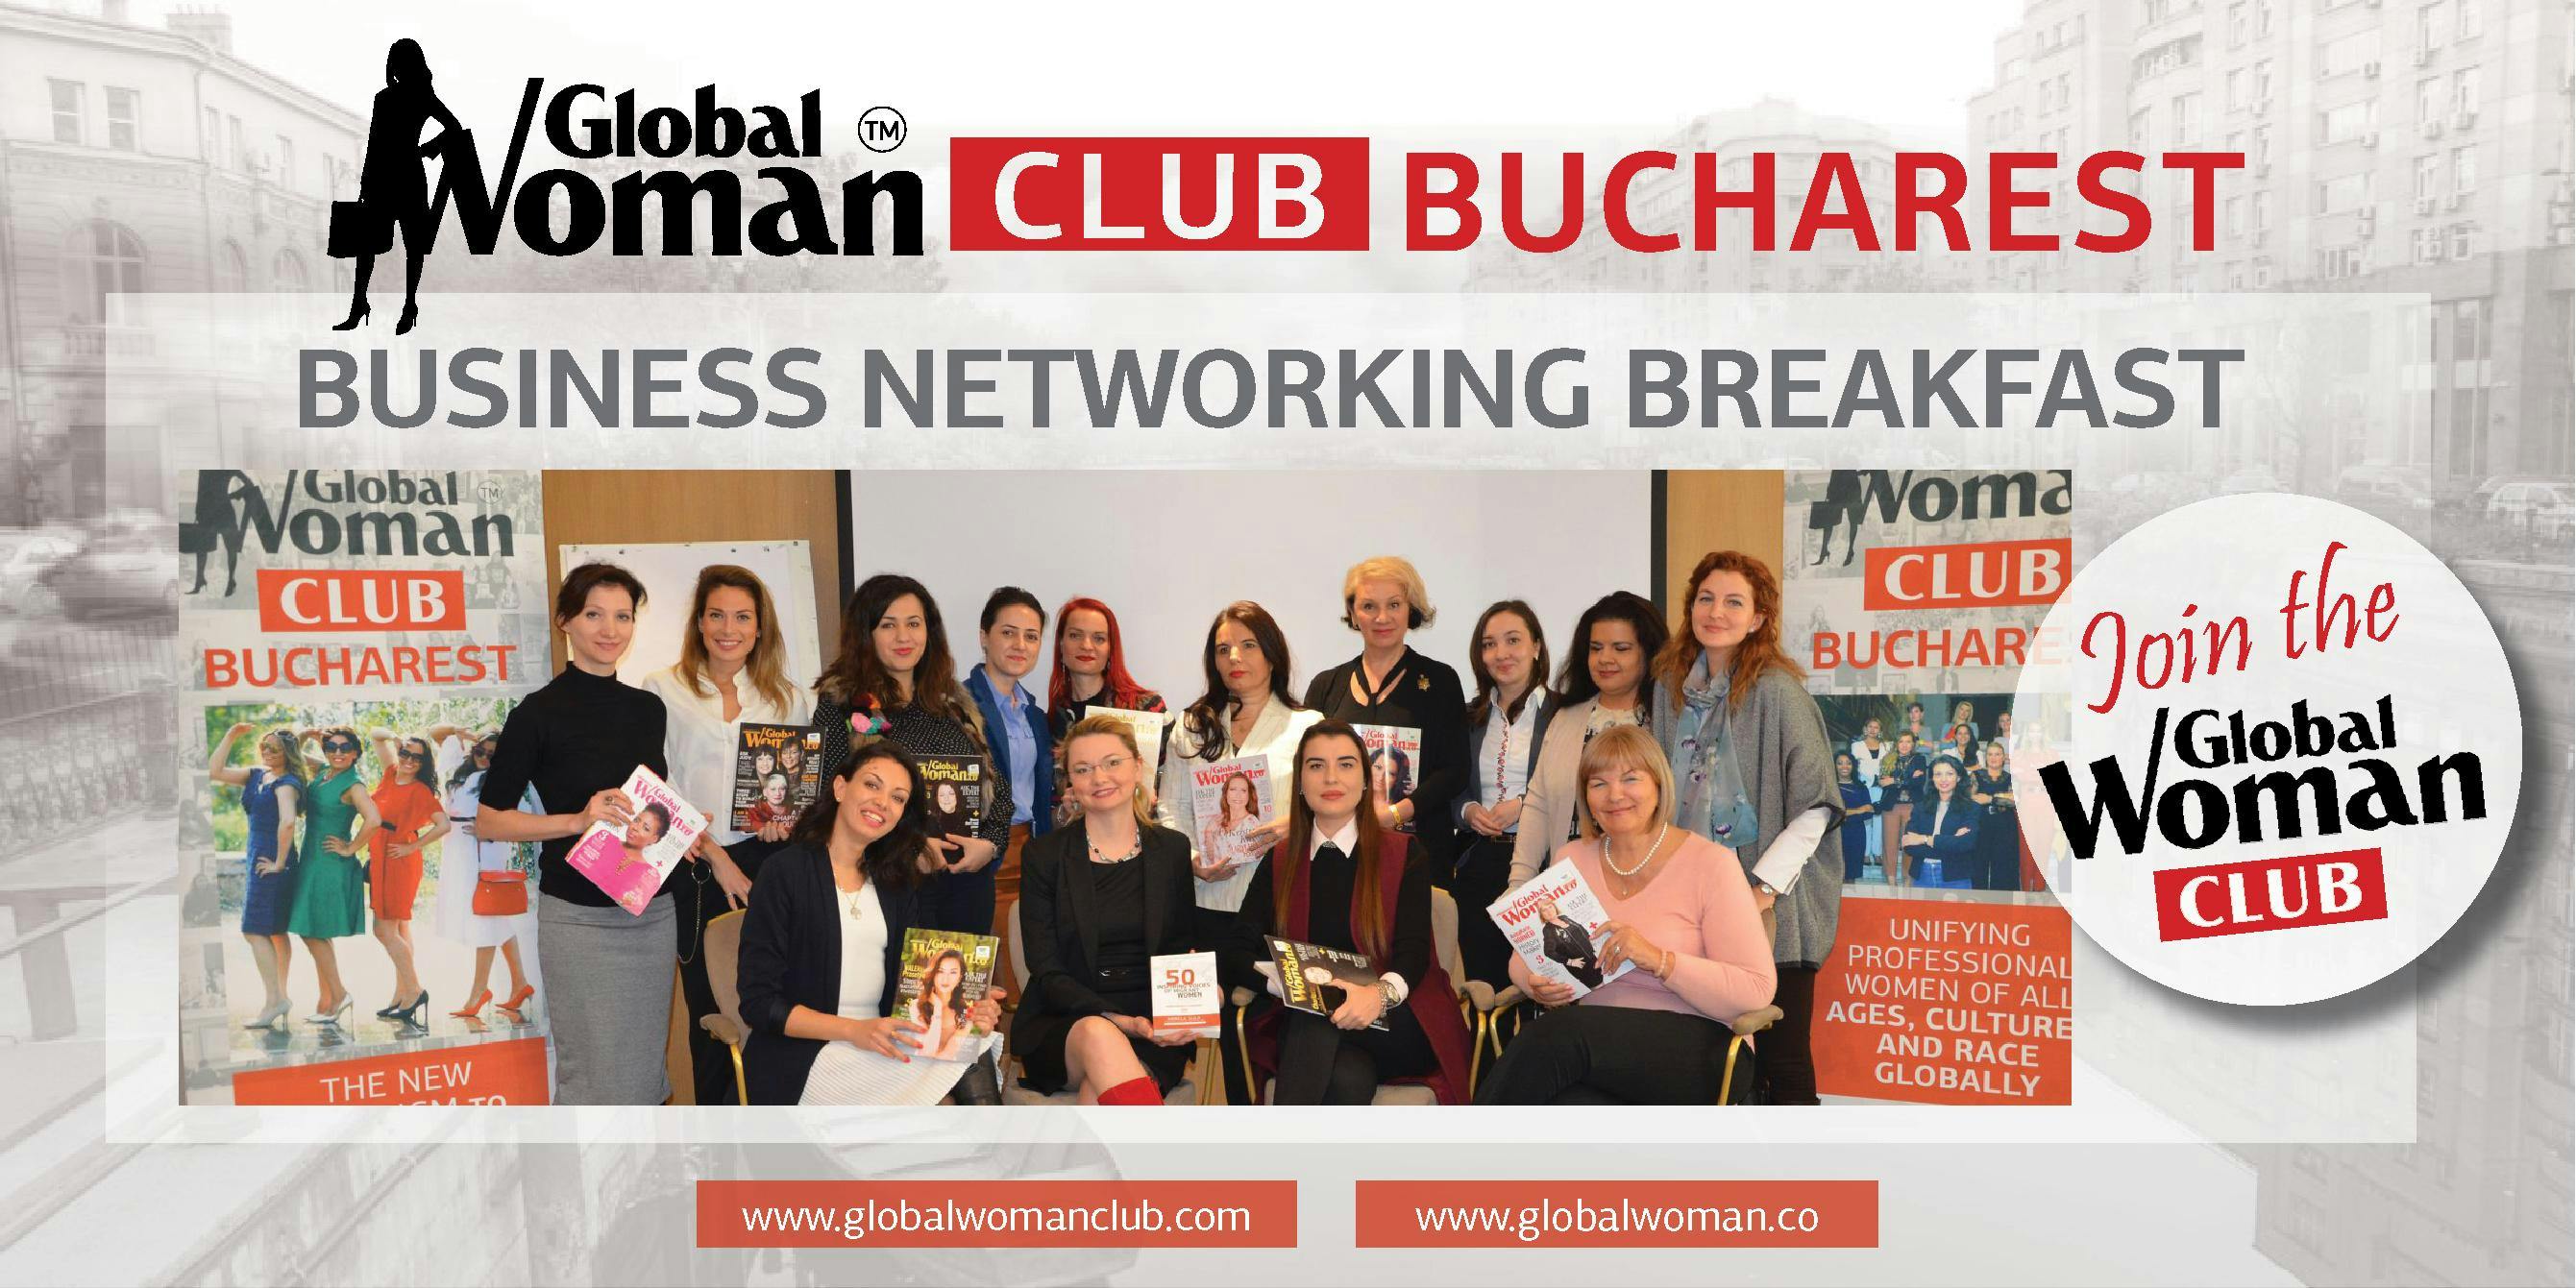 GLOBAL WOMAN CLUB BUCHAREST: BUSINESS NETWORKING BREAKFAST - AUGUST